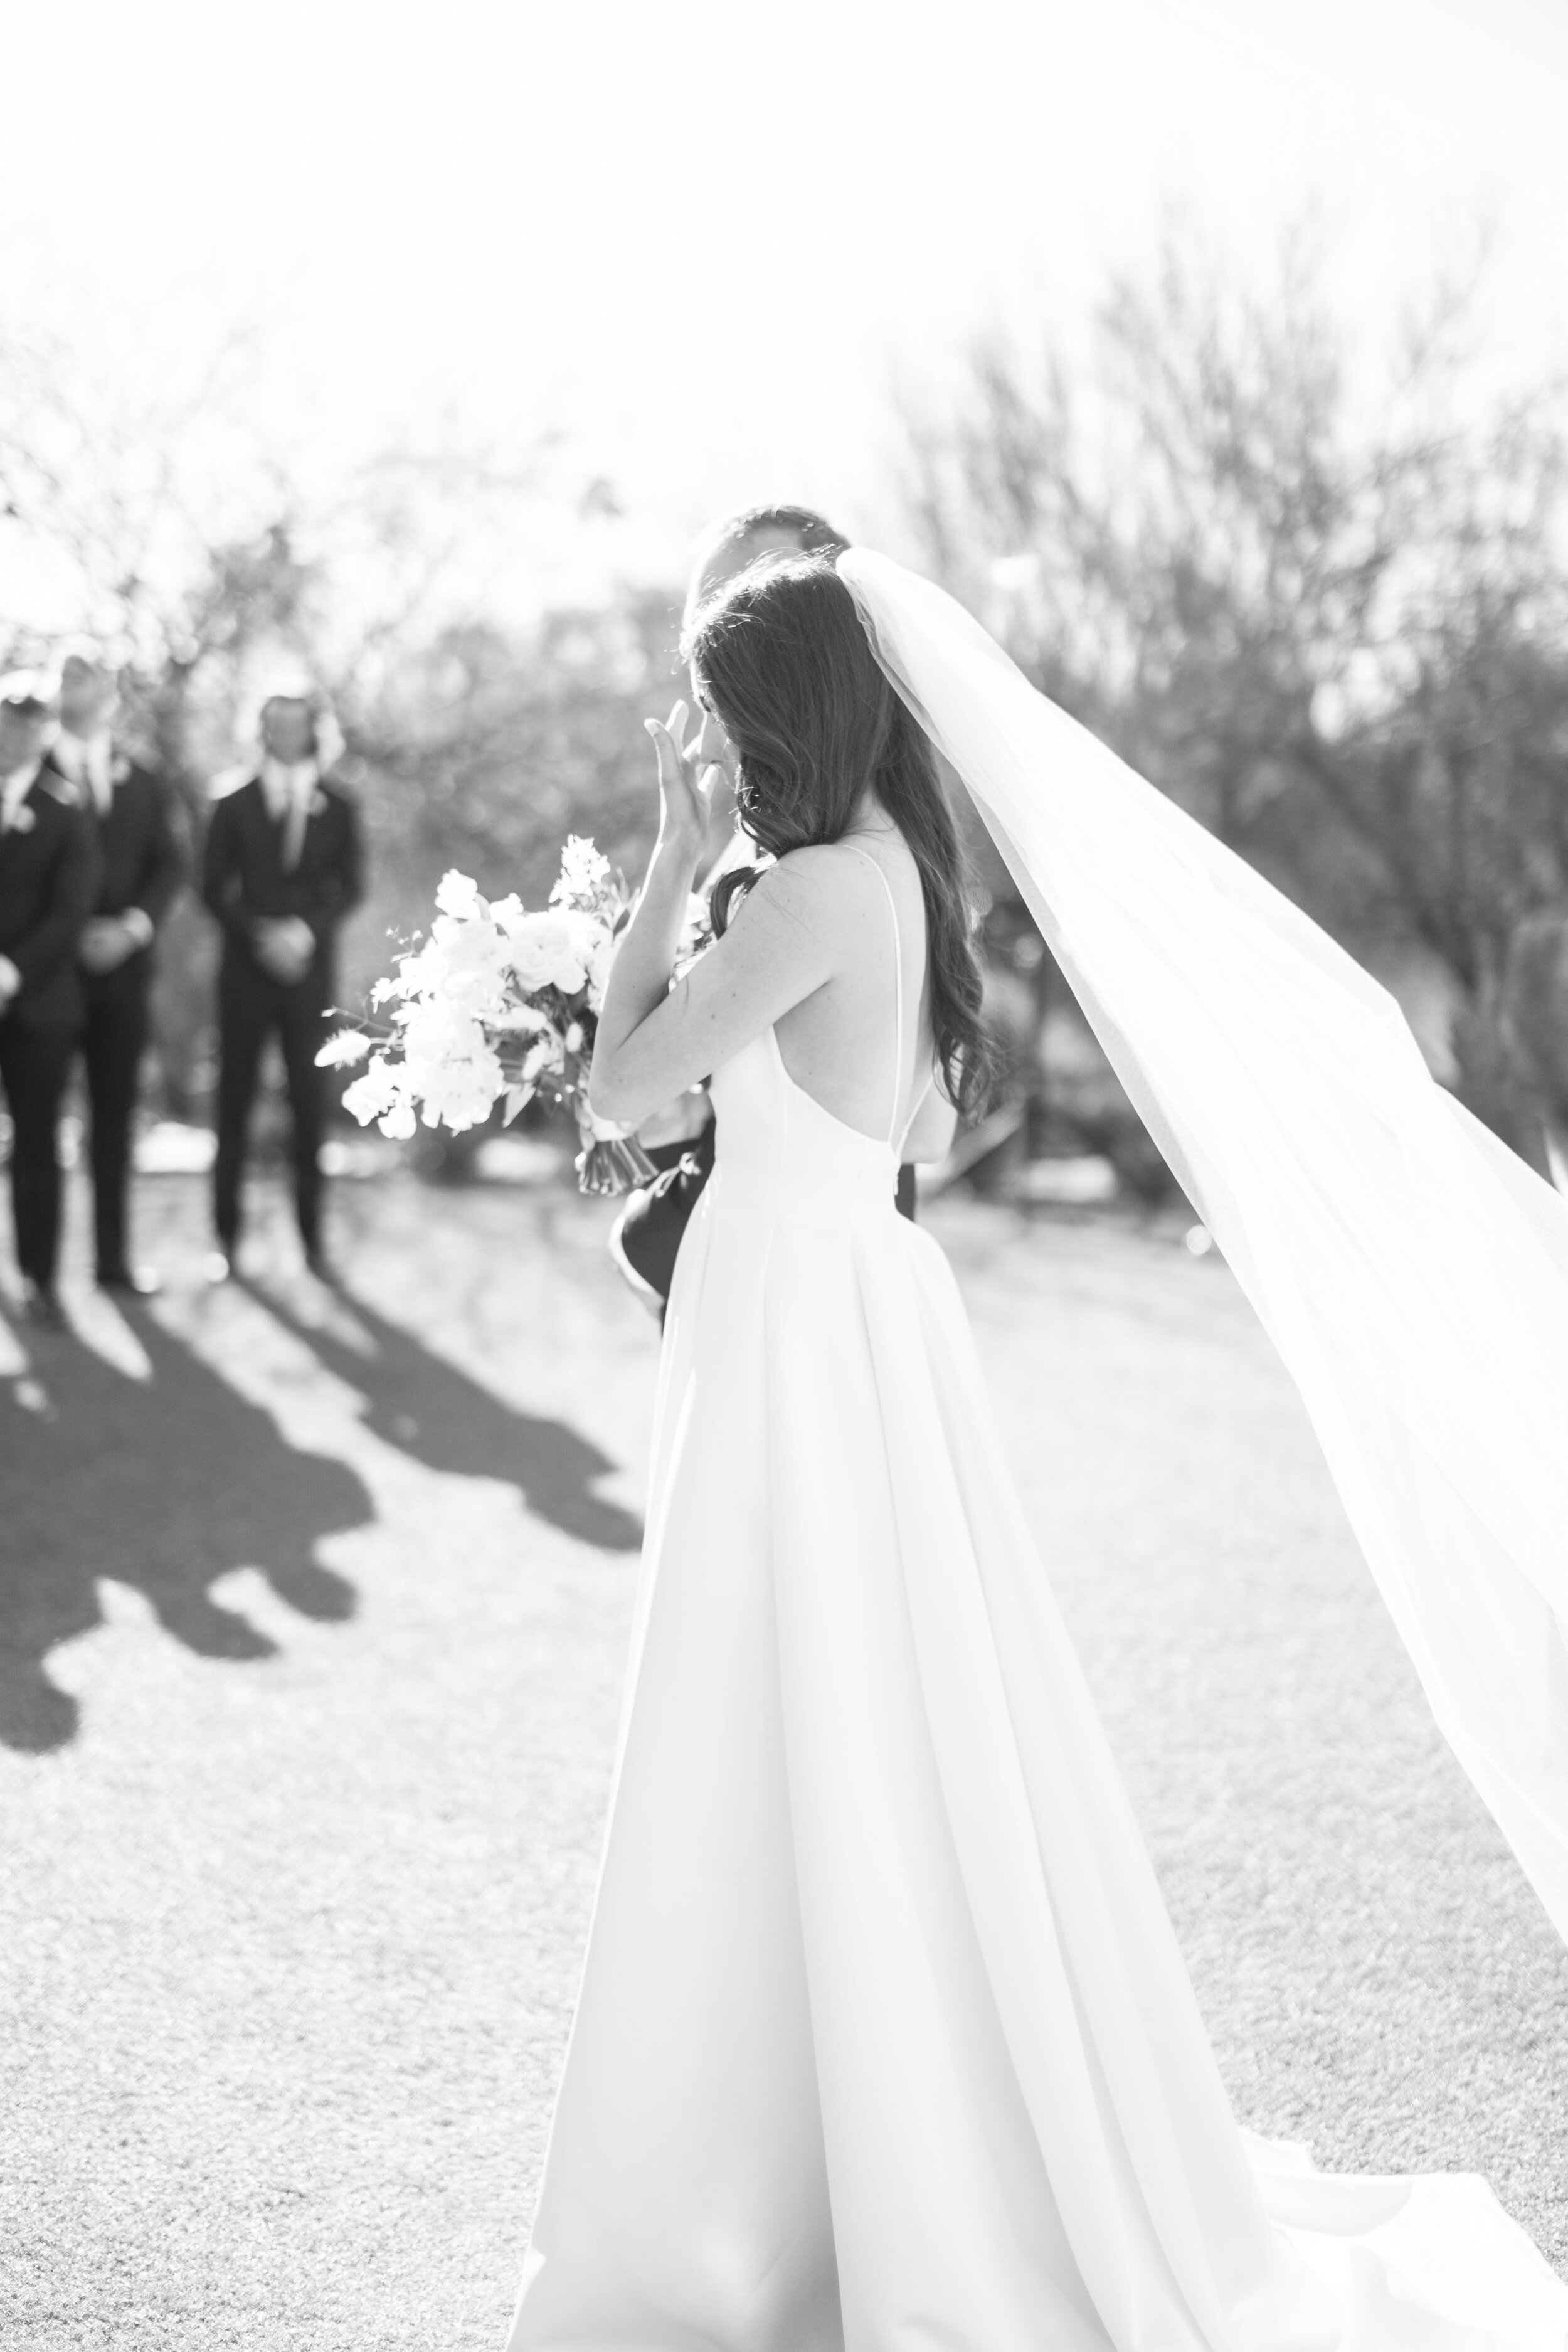 El Chorro Wedding — A Day to Cherish Weddings | Phoenix & Scottsdale ...